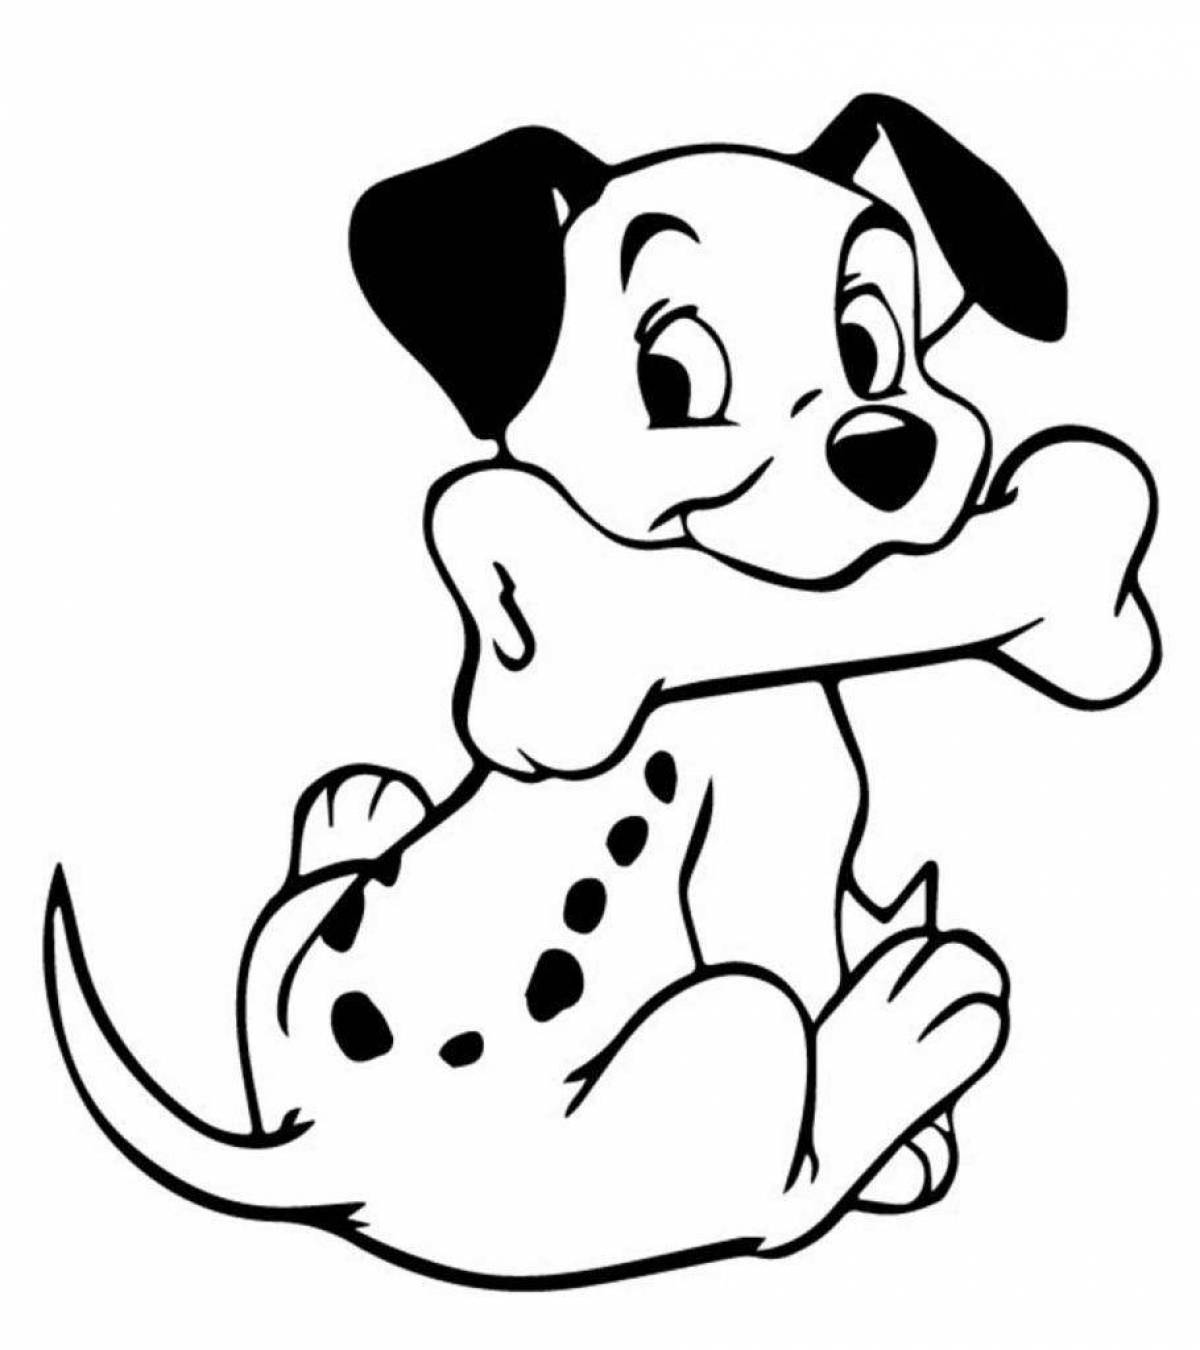 Dog cartoon coloring page